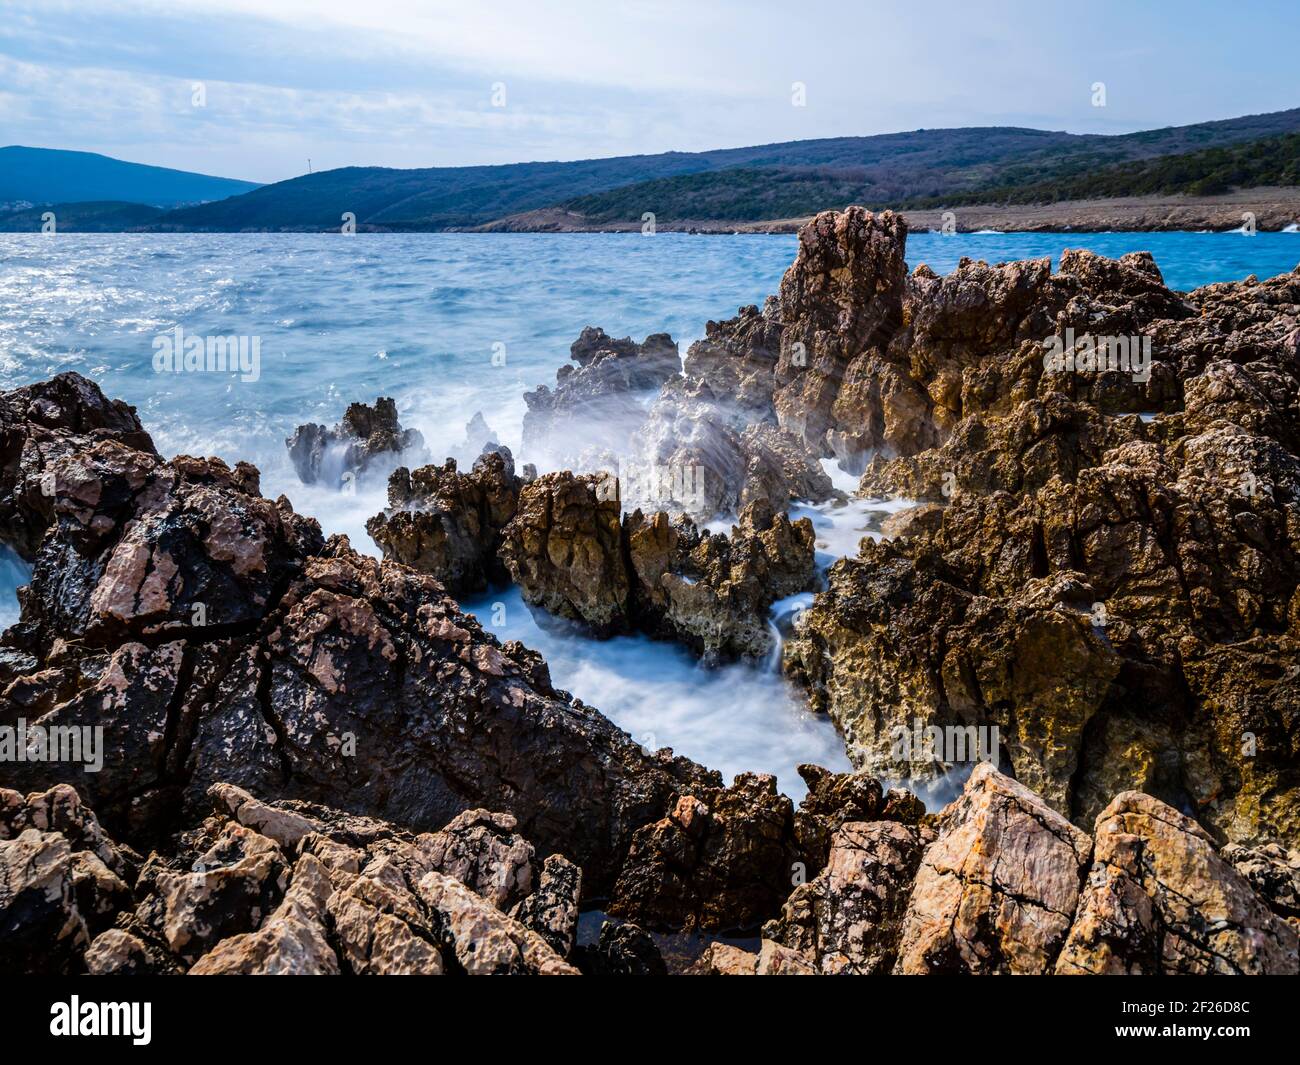 Rough dangerous rocky sea coastline coast Risika on island Krk in Croatia Europe Stock Photo